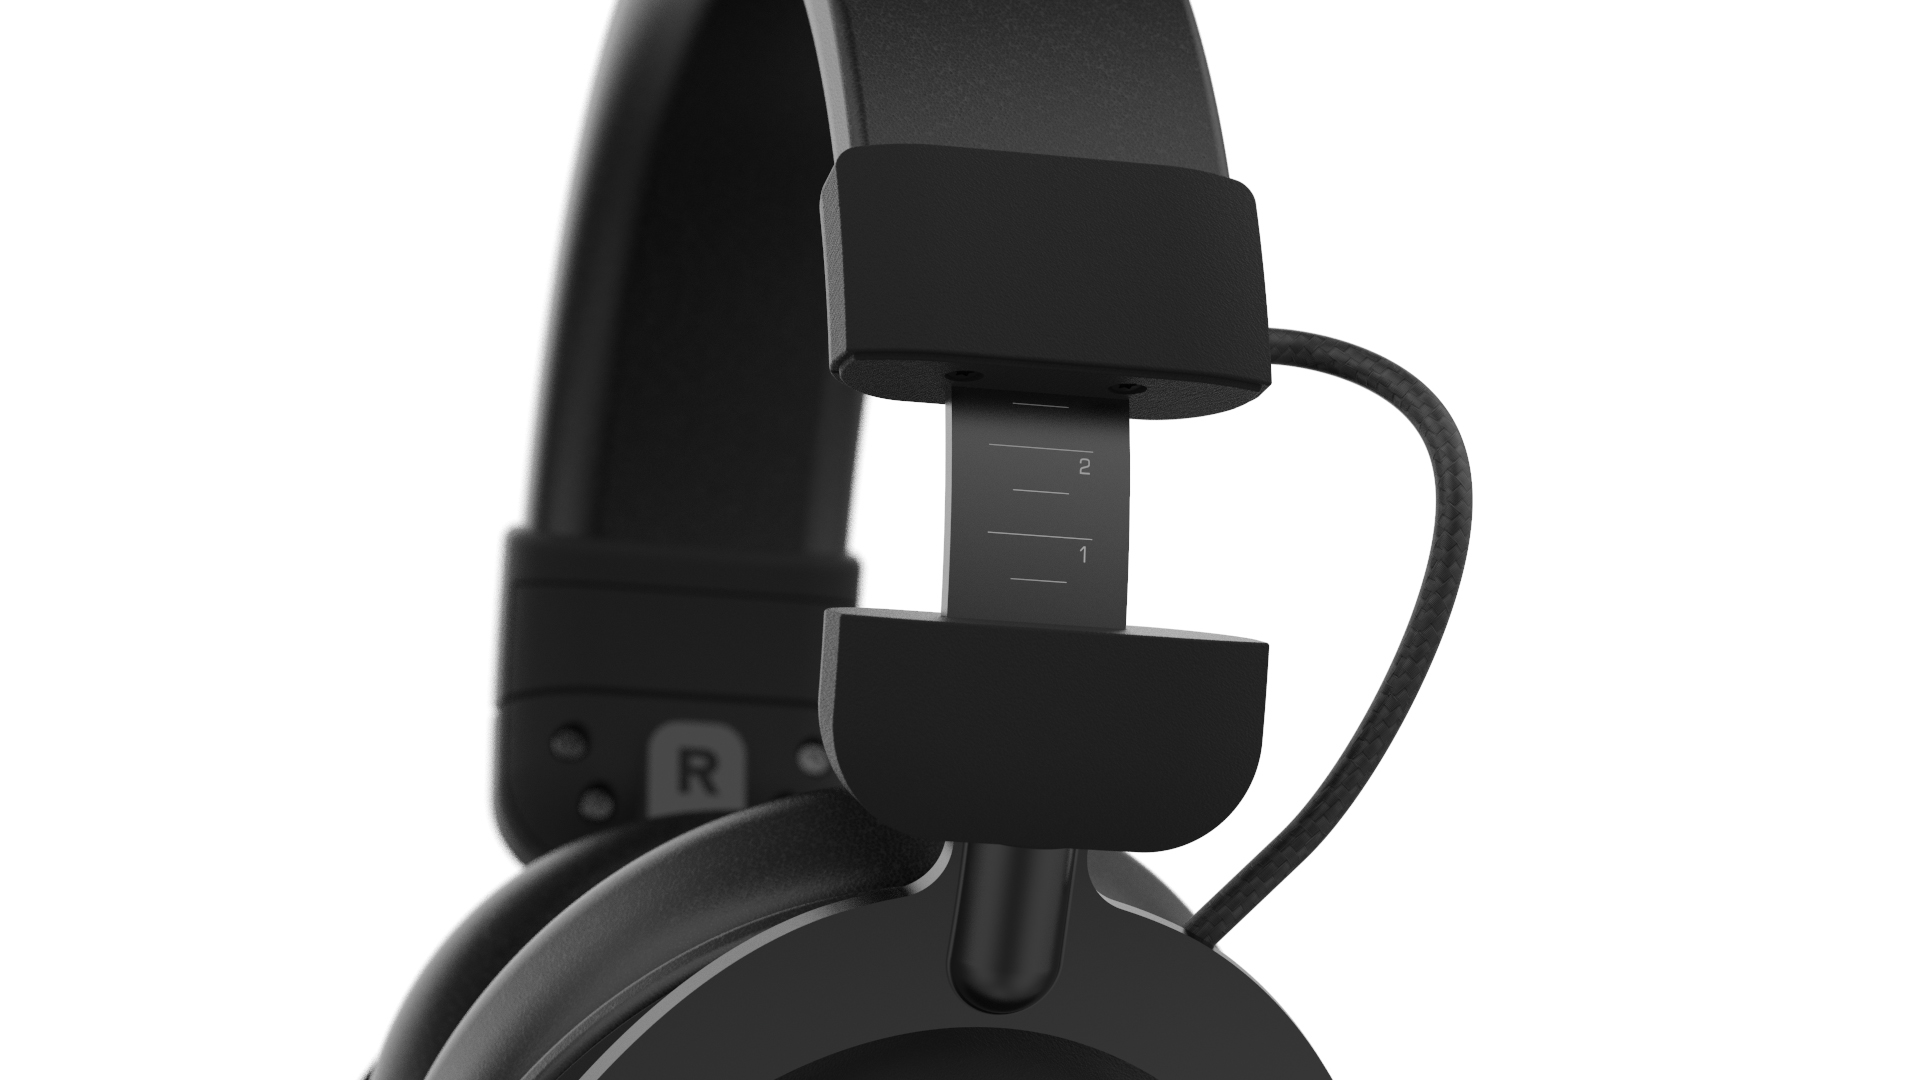 Headset Schwarz QPAD Over-ear Bluetooth QPAD®|QH900, Gaming